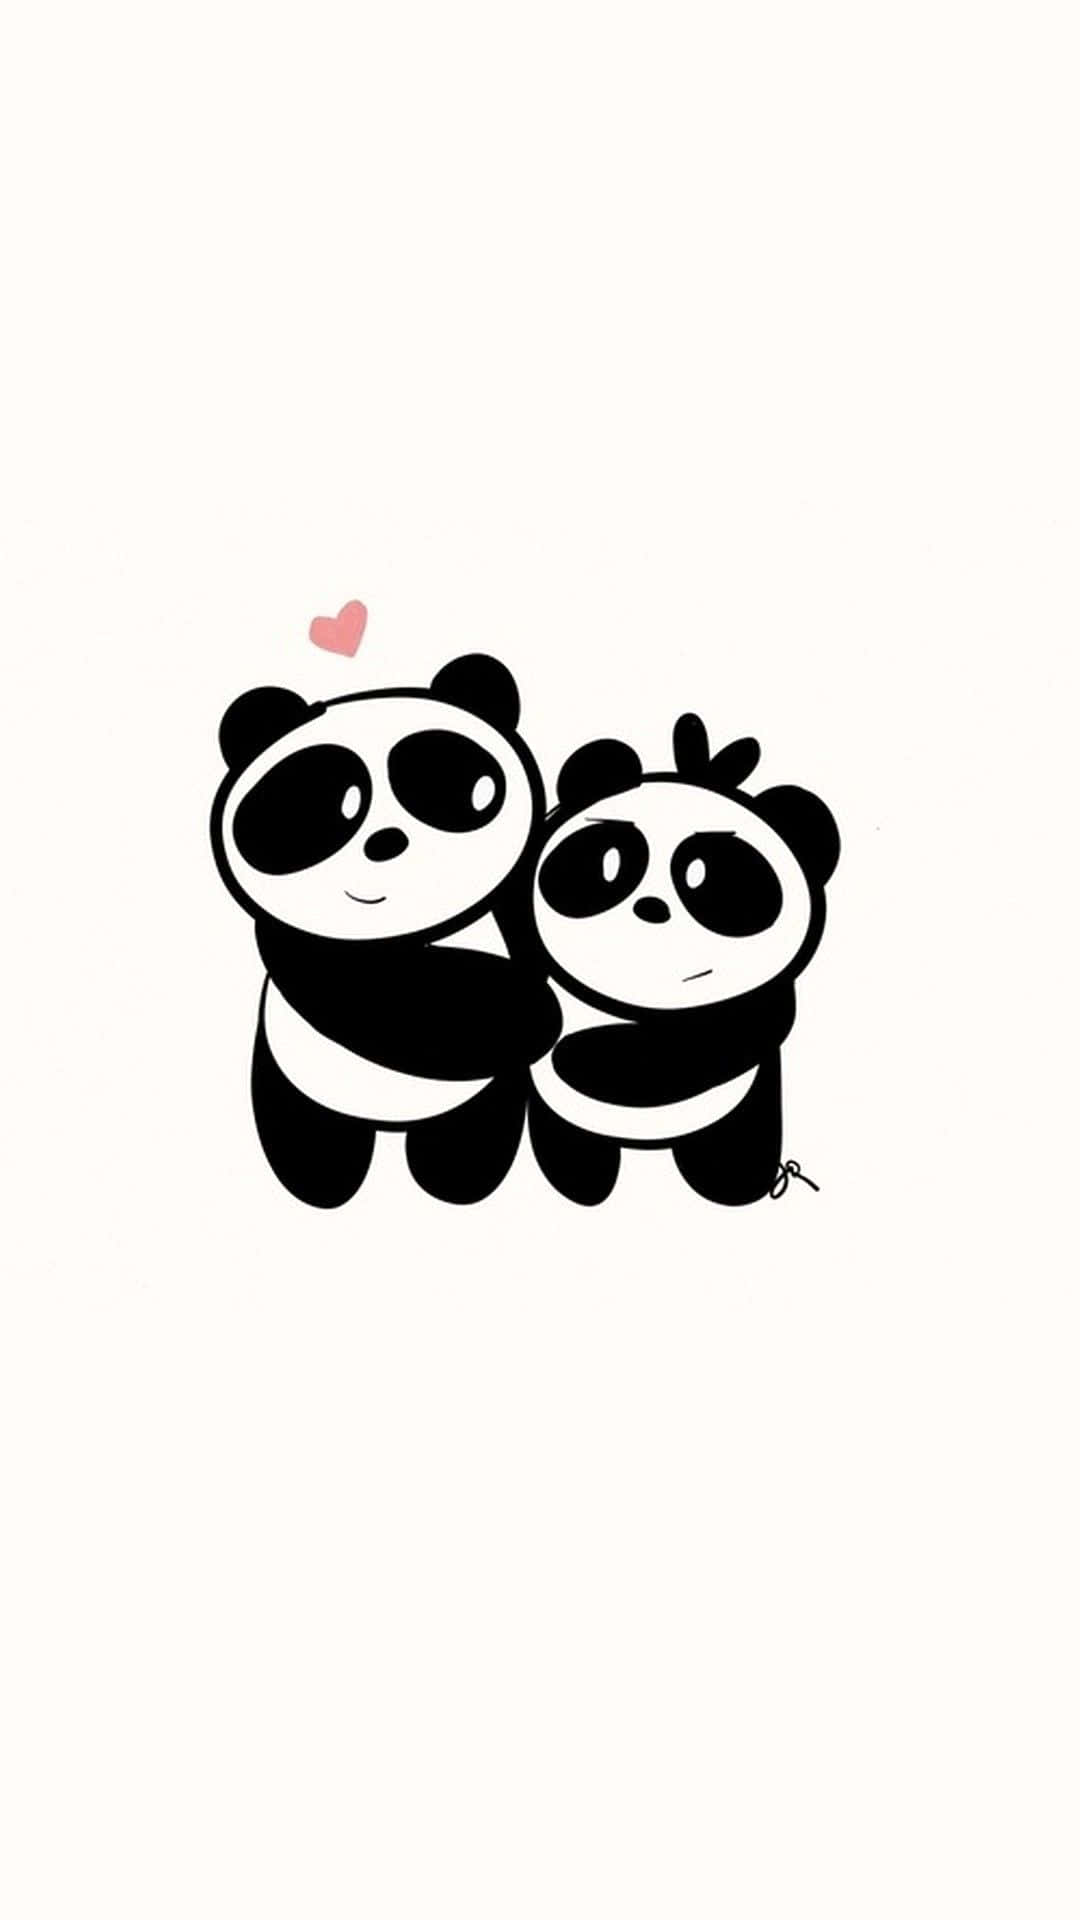 Gently Adorable: A Cute Kawaii Panda" Wallpaper